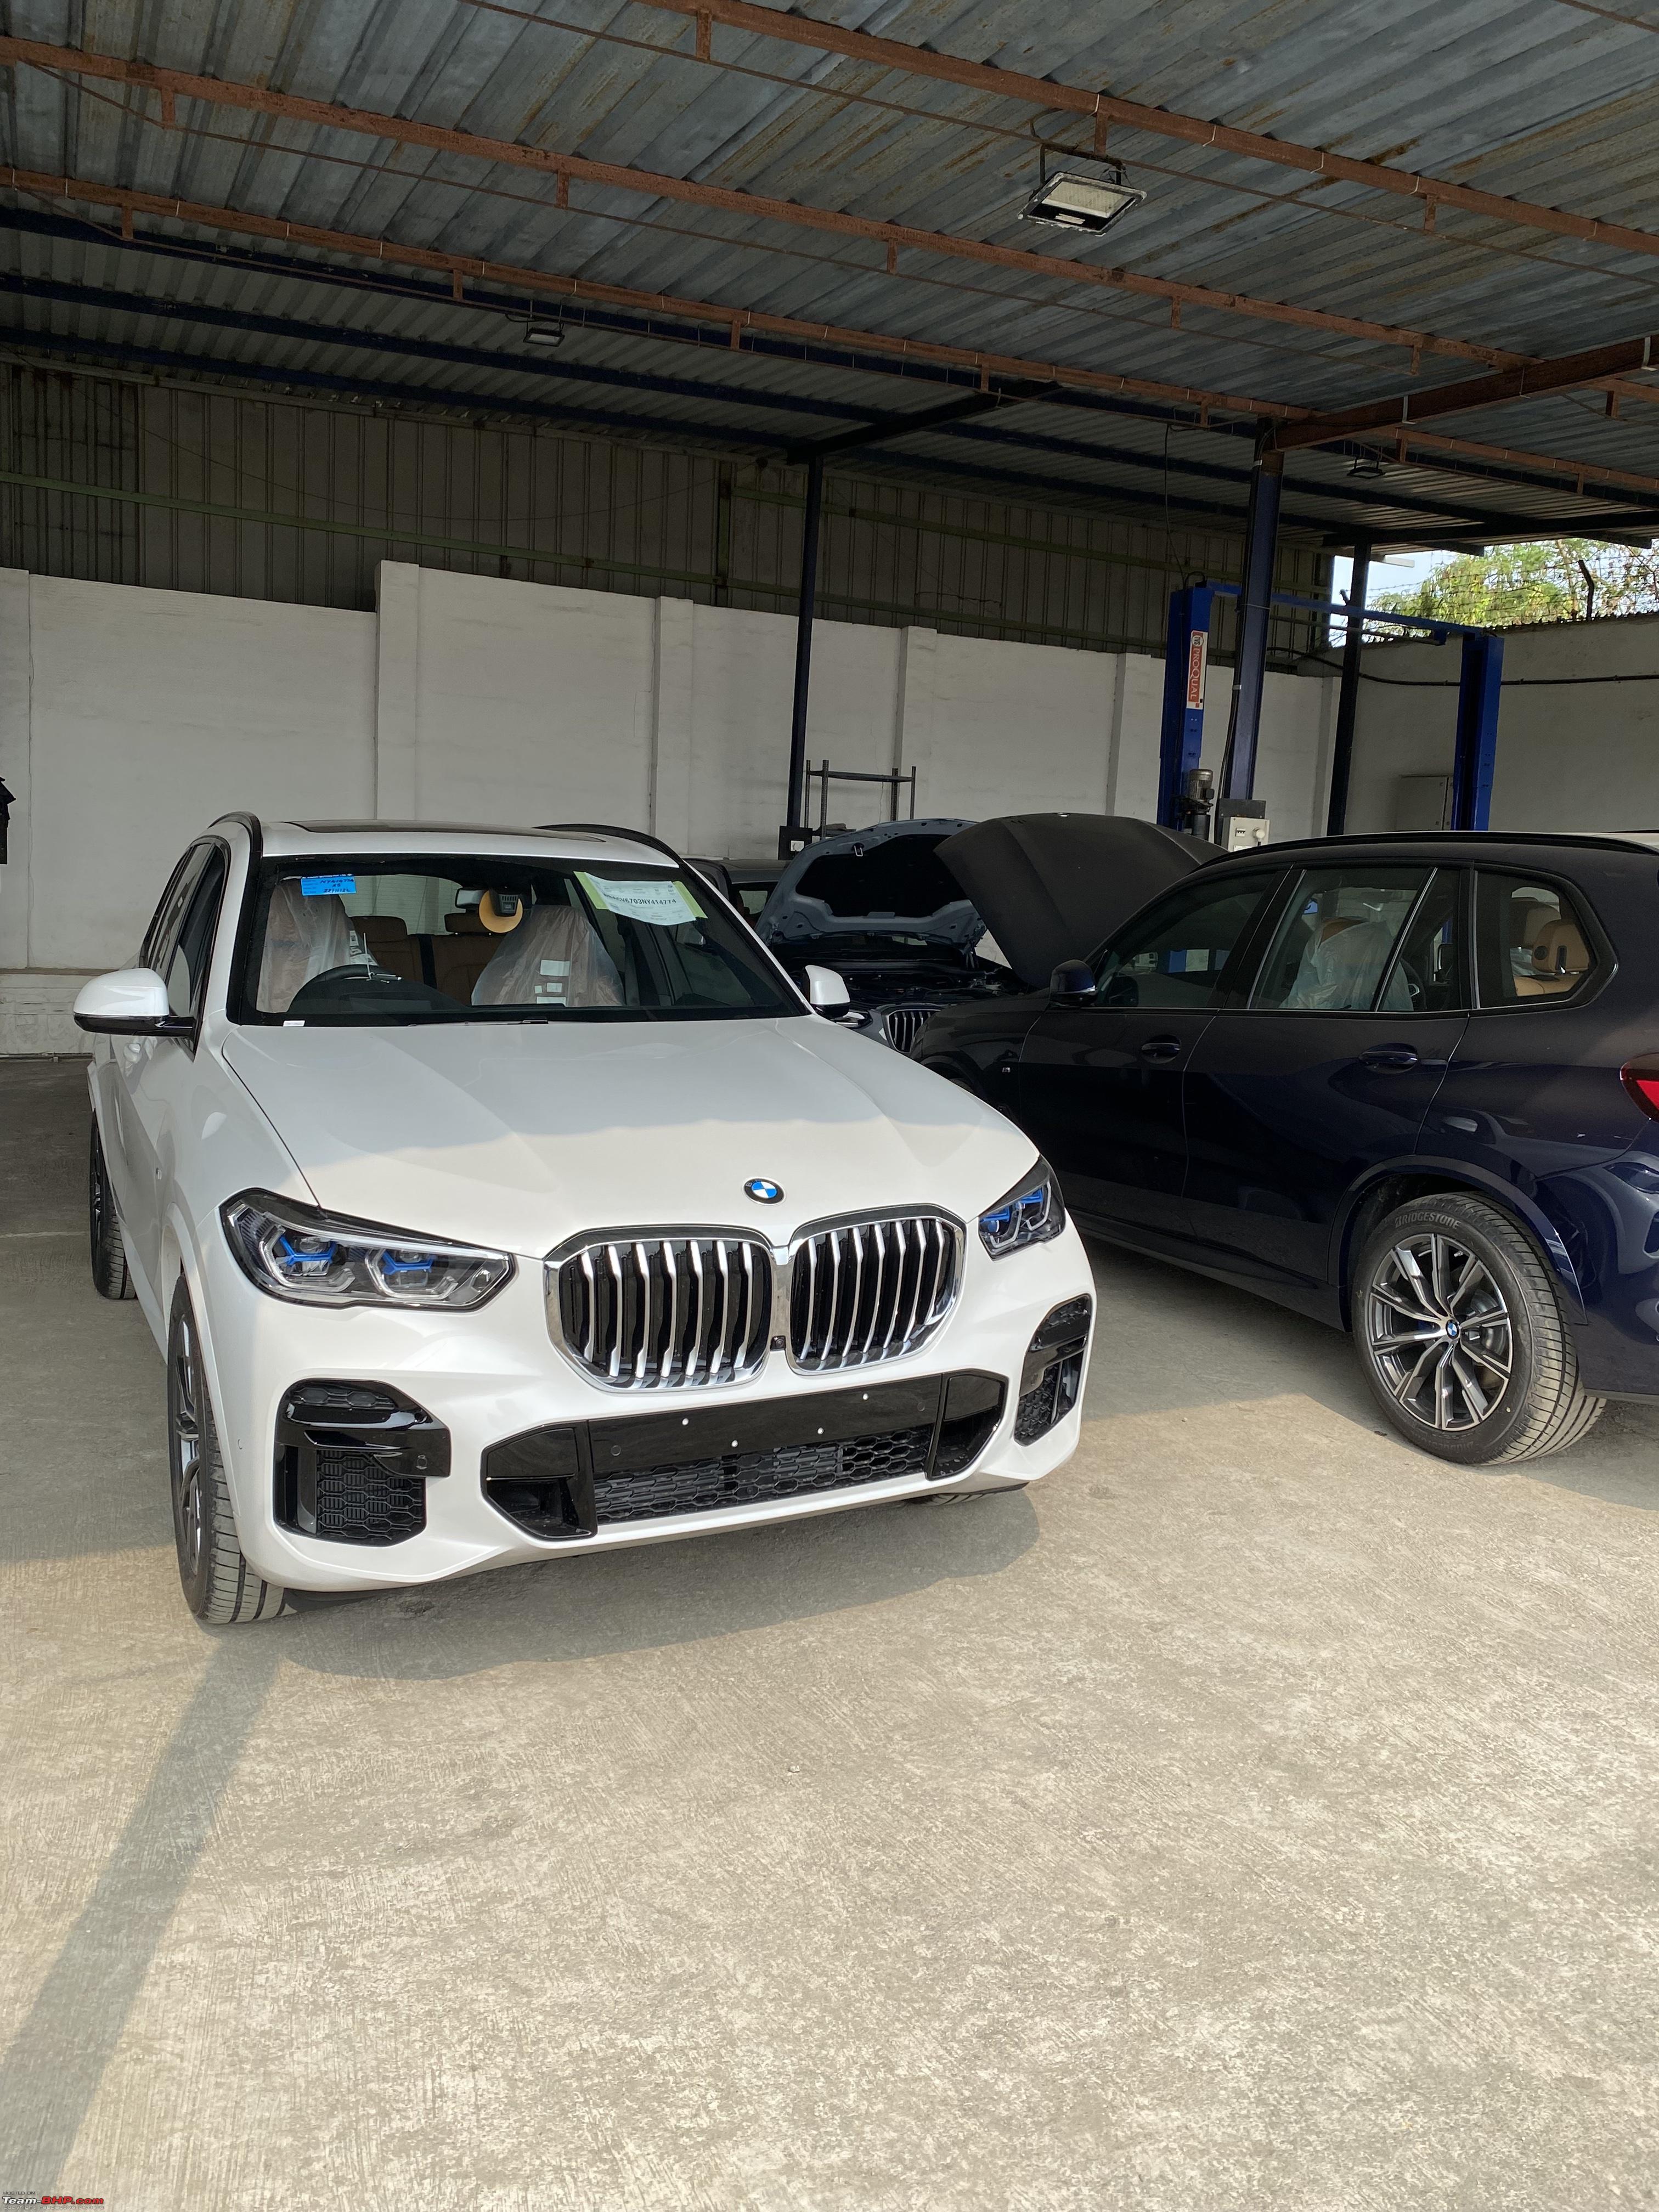 BMW X5 (G05): Engines & Technical Data